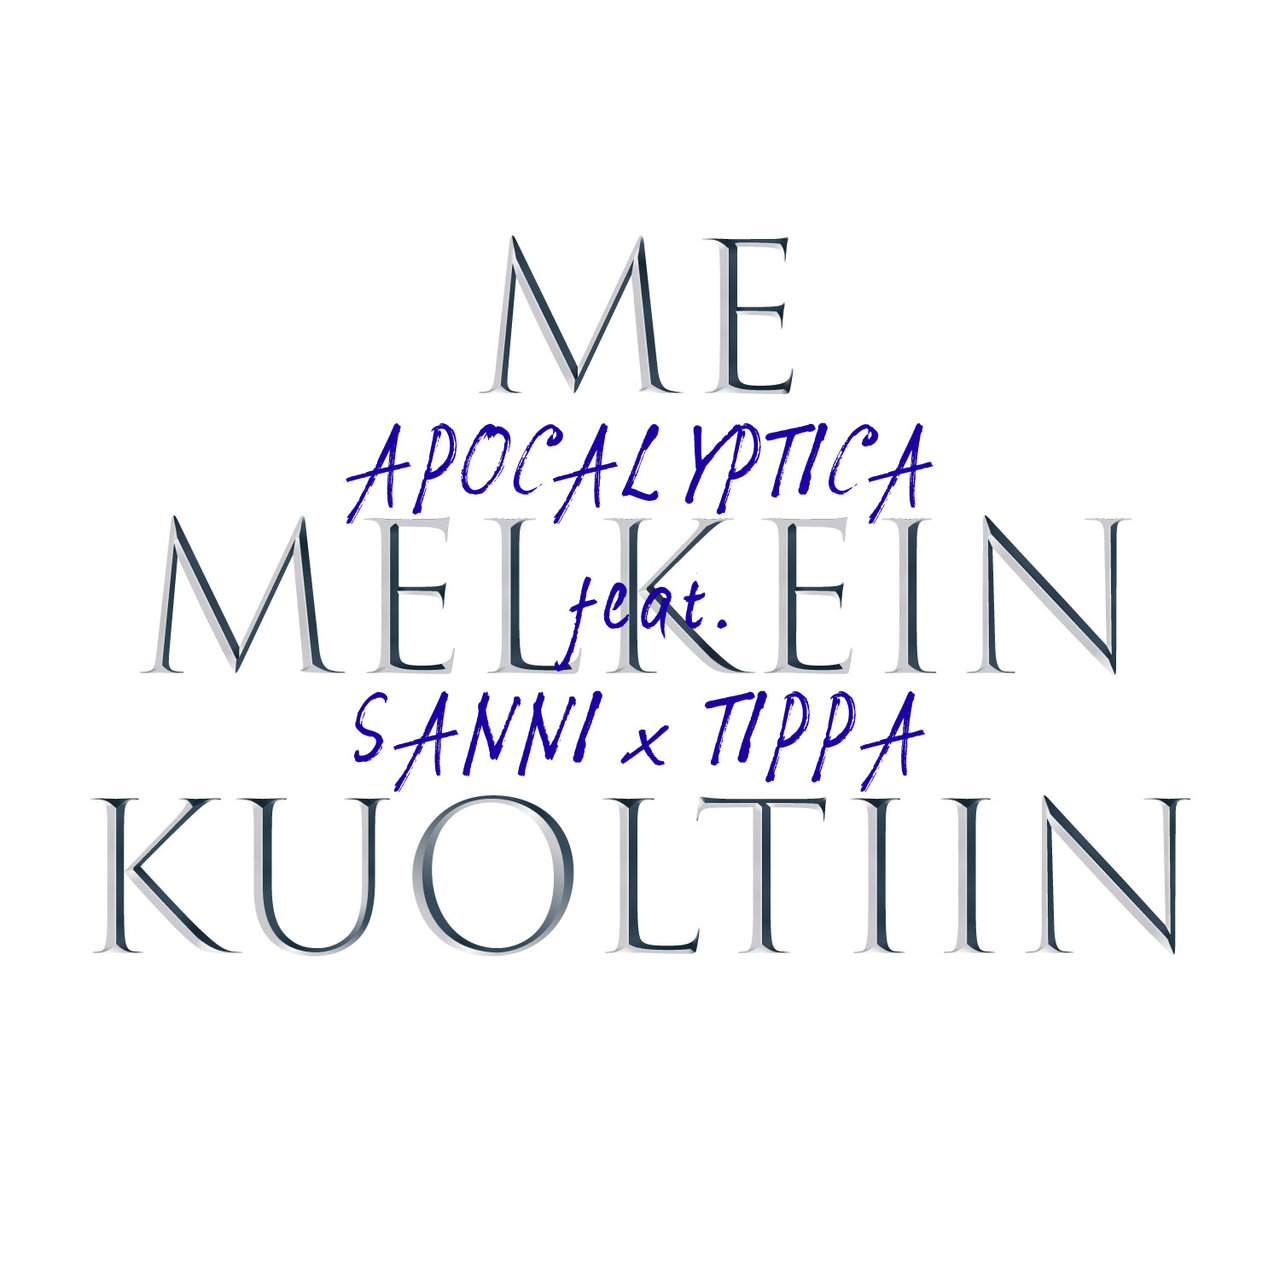 Apocalyptica featuring Sanni & Tippa — Me melkein kuoltiin cover artwork